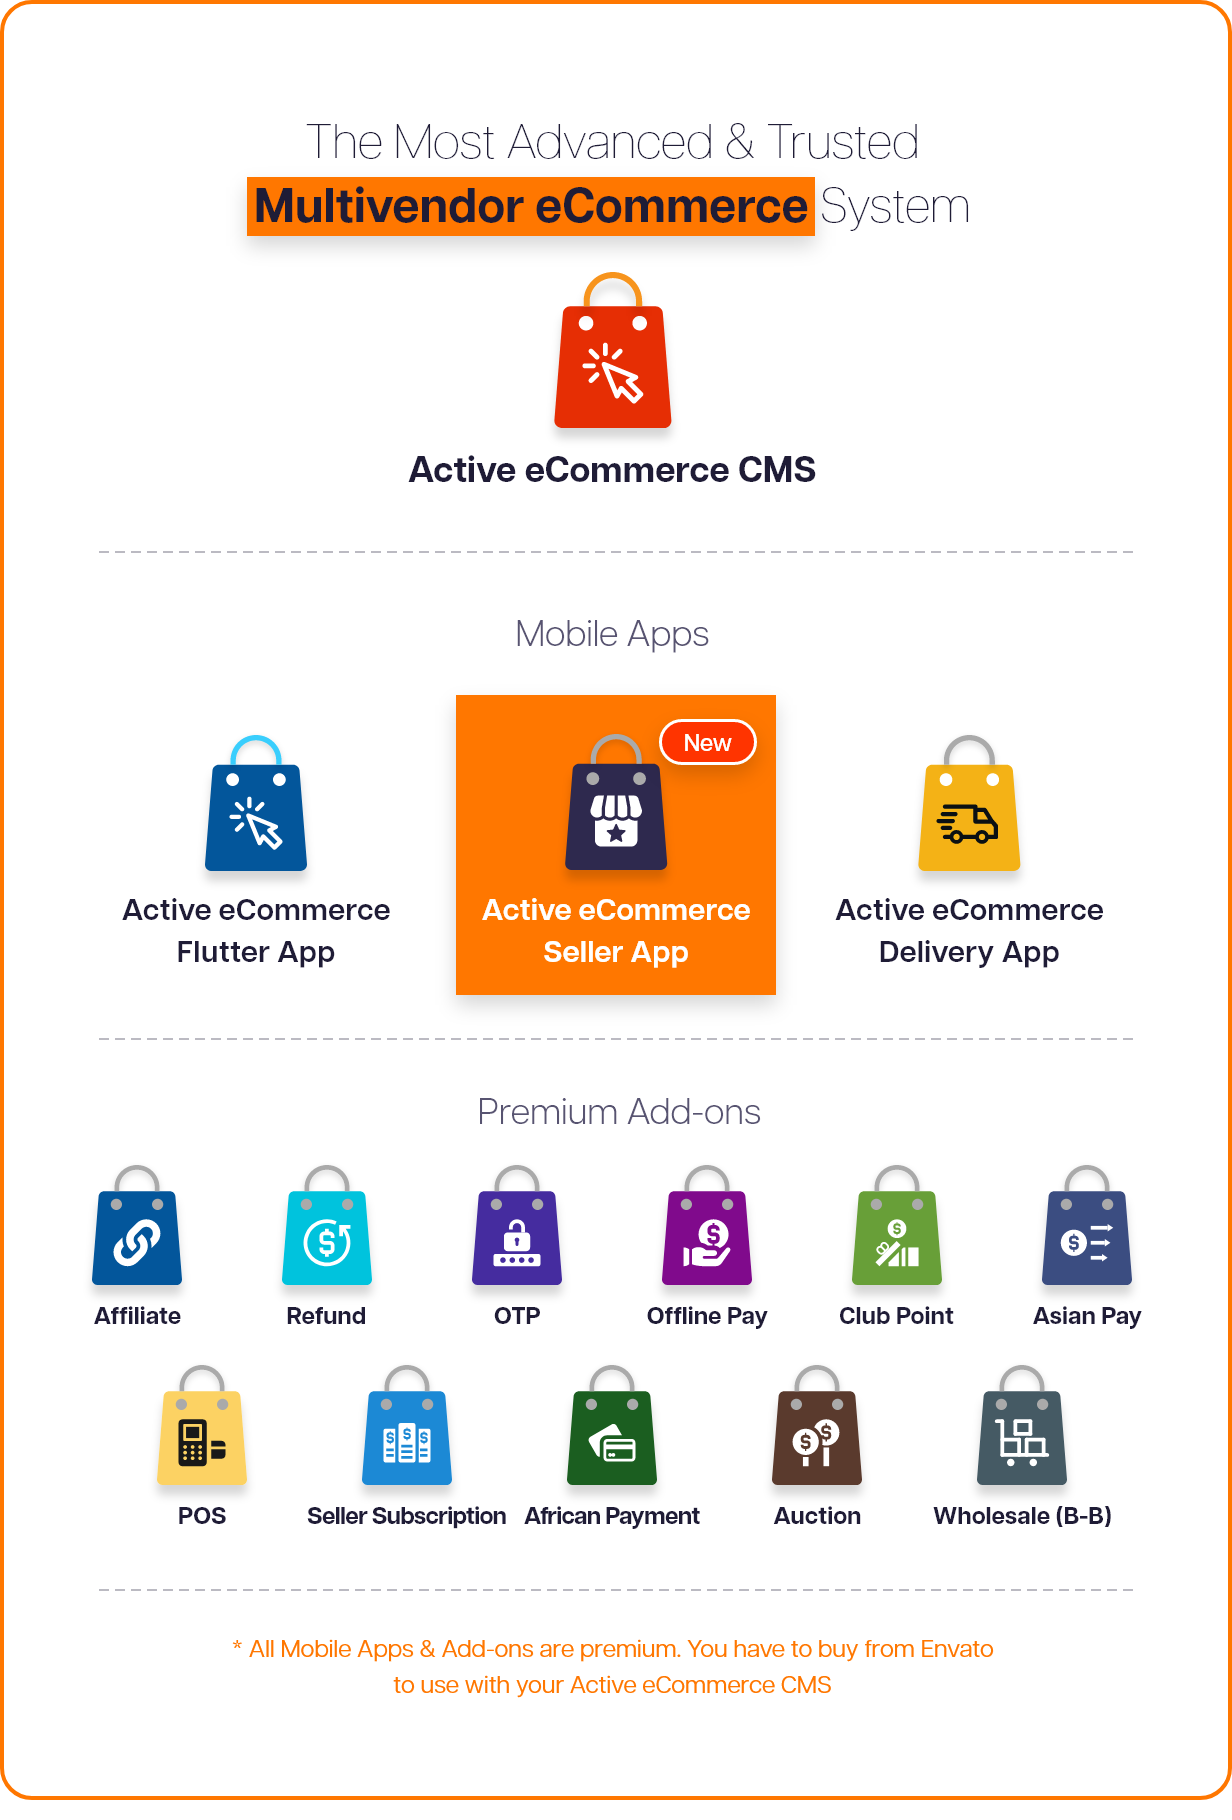 Active eCommerce Seller App - 3